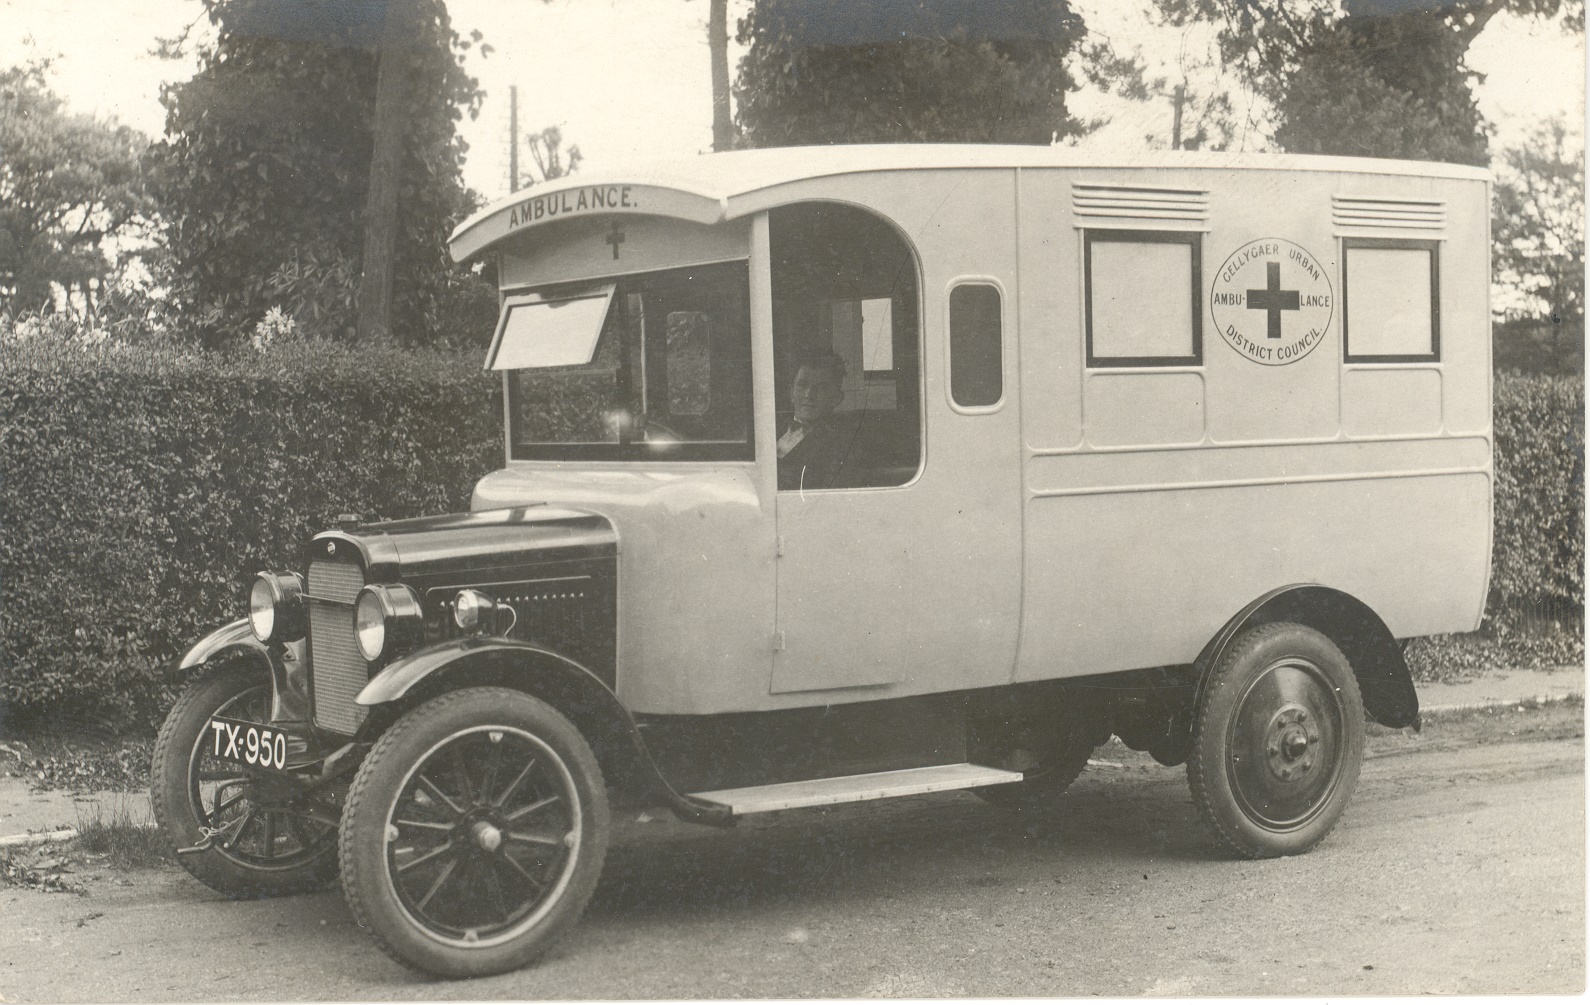 191.1979/4 Image of Gellygaer Urban District Council ambulance